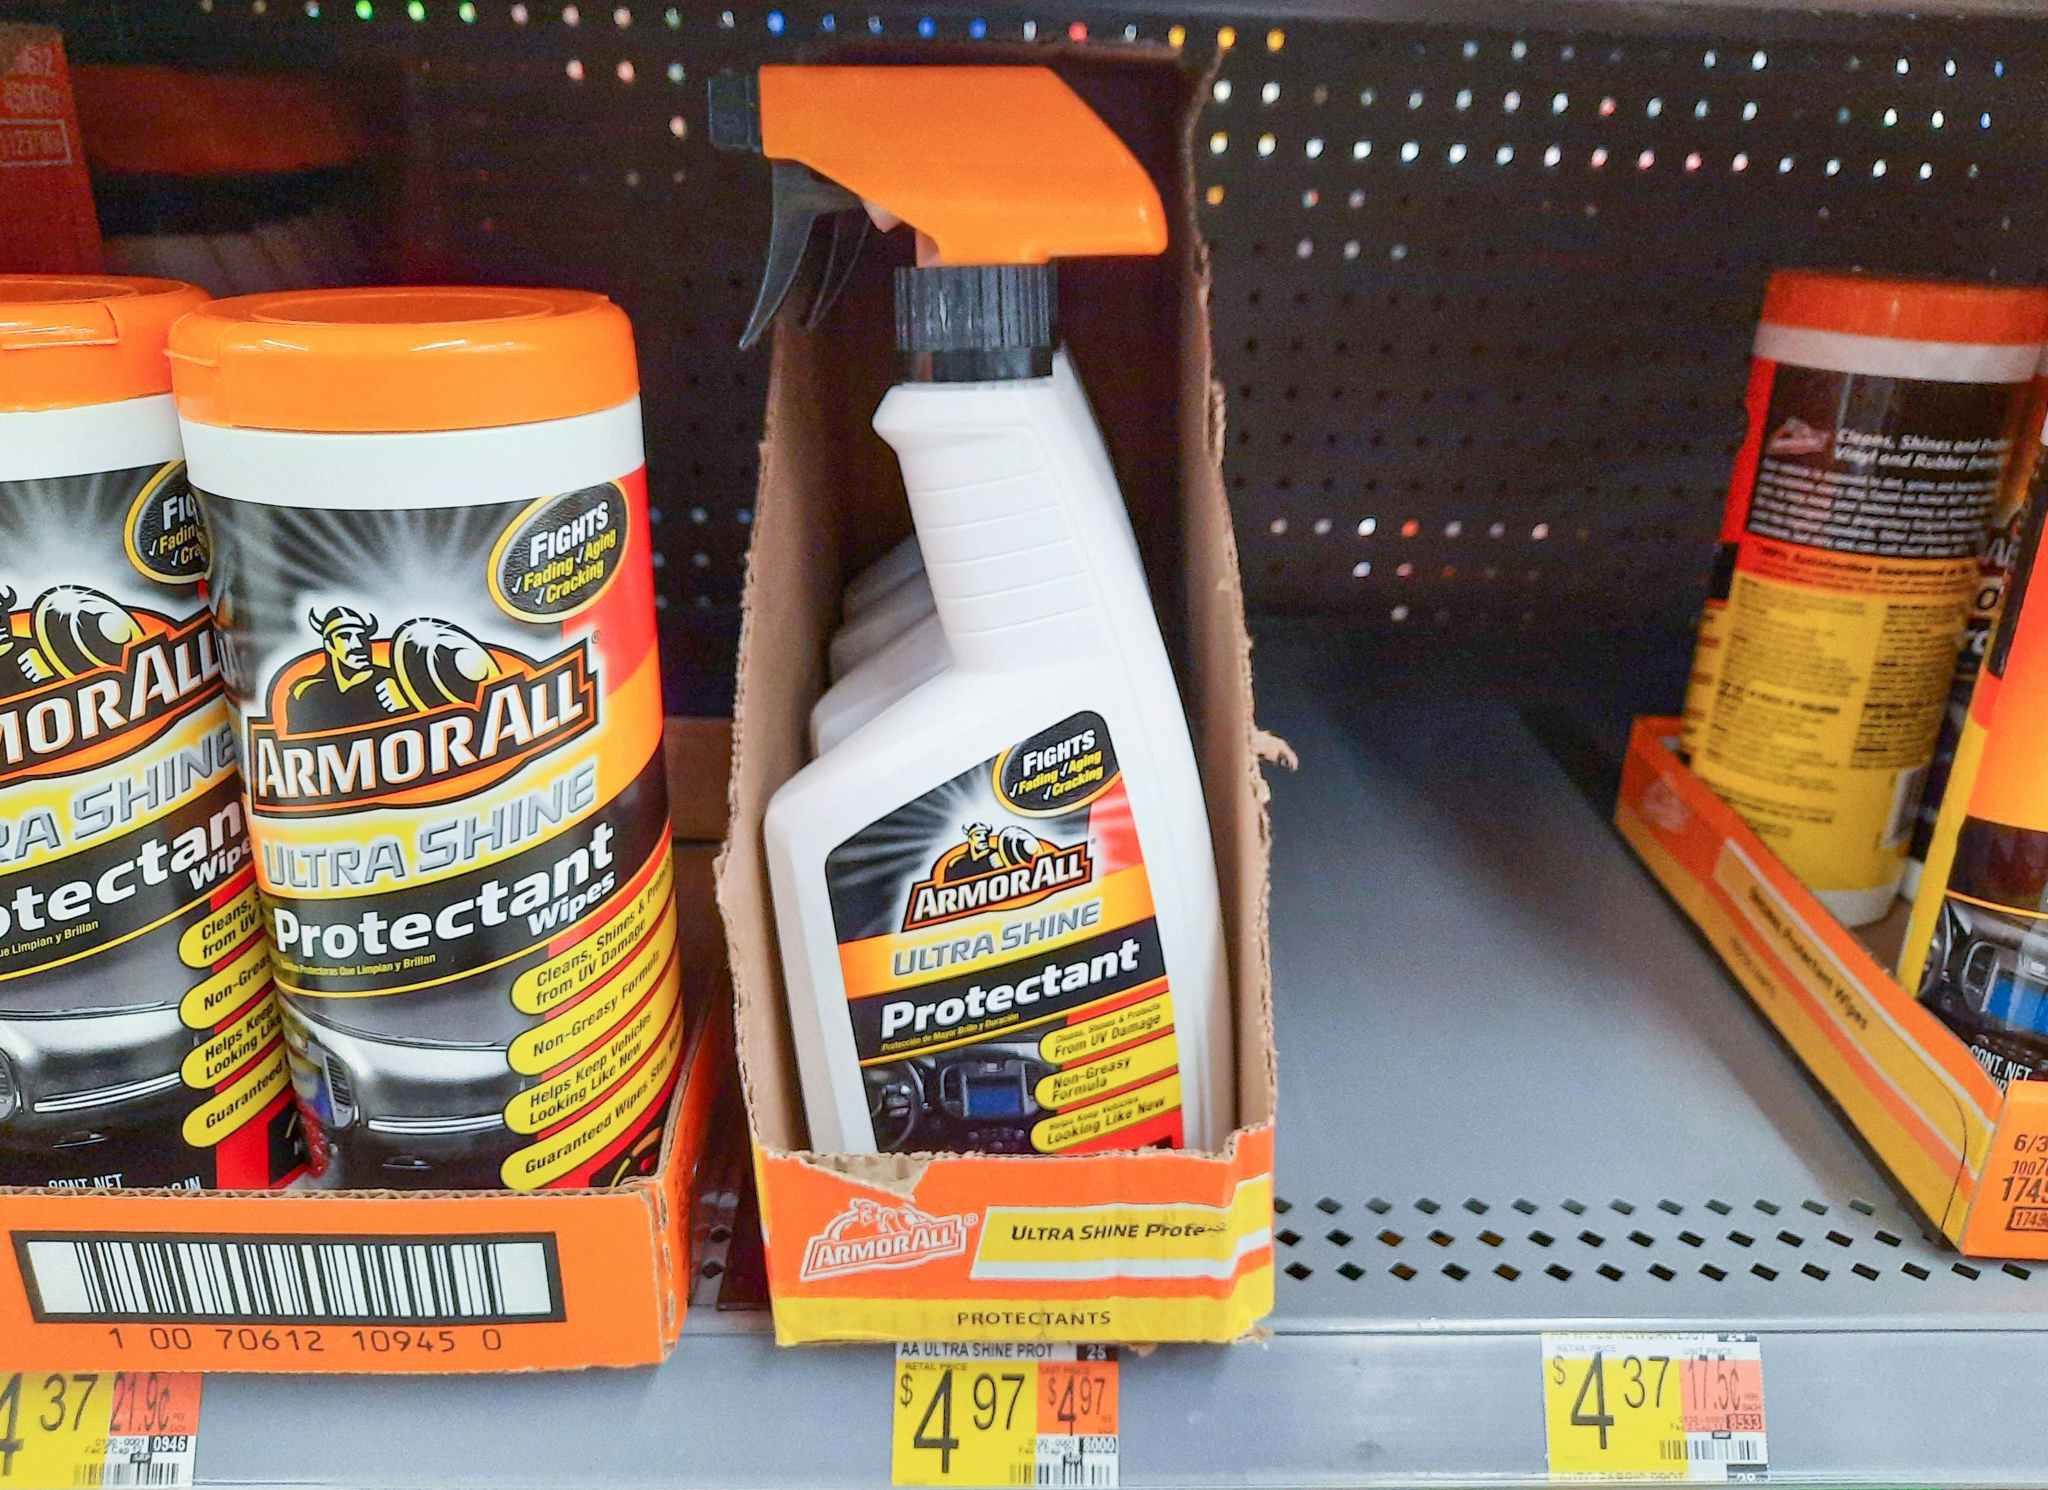 Armor All Protectant Spray at Walmart